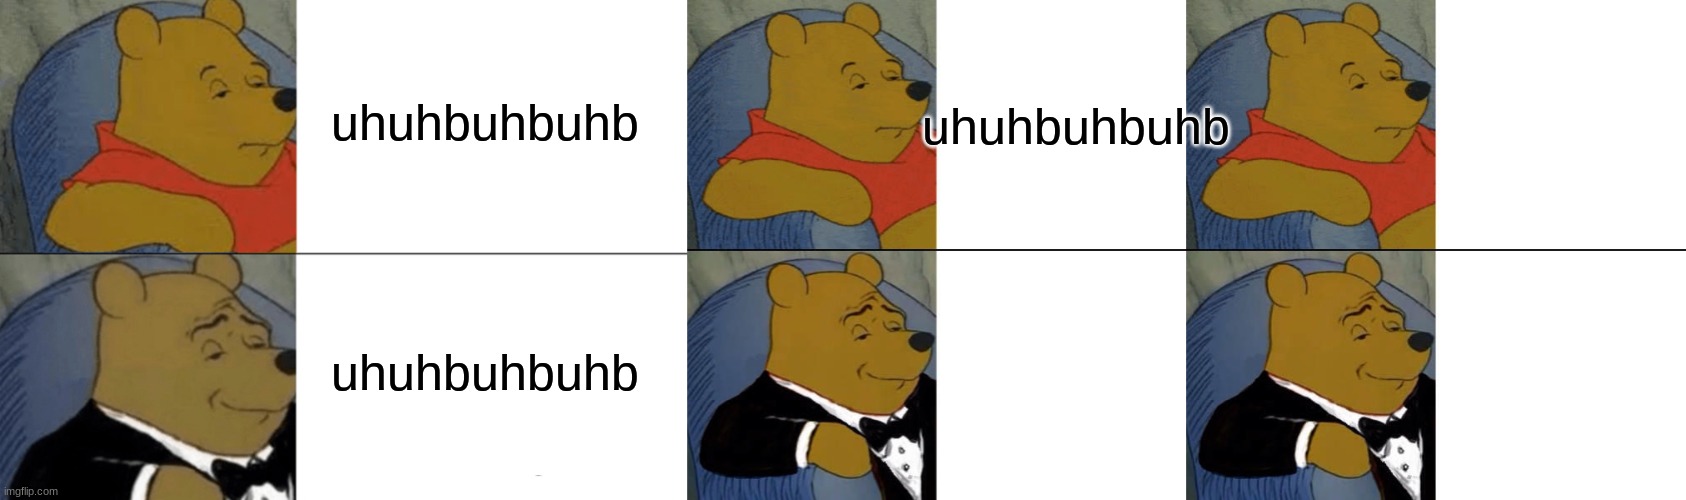 uhuhbuhbuhb; uhuhbuhbuhb; uhuhbuhbuhb | image tagged in memes,tuxedo winnie the pooh | made w/ Imgflip meme maker